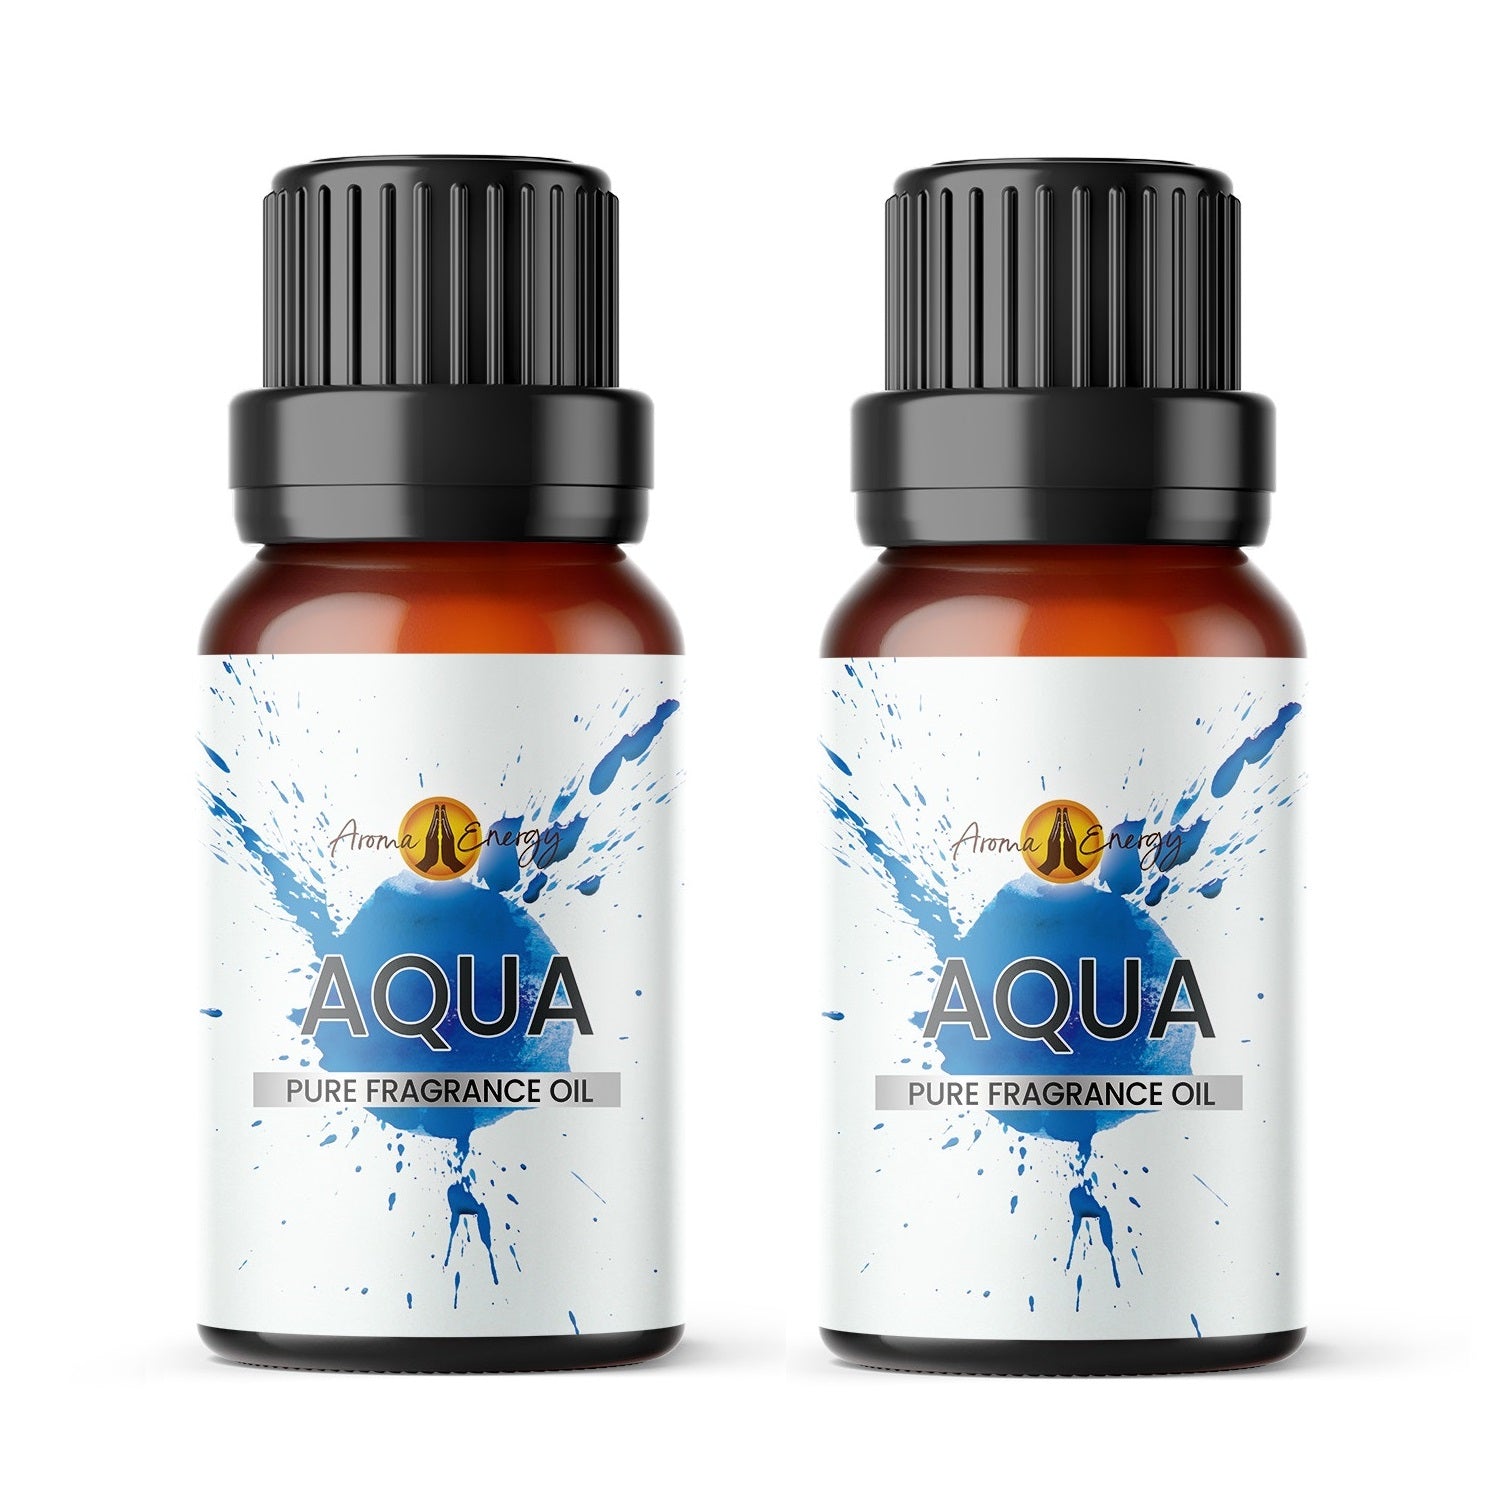 Aqua Designer Fragrance Oil - Aroma Energy